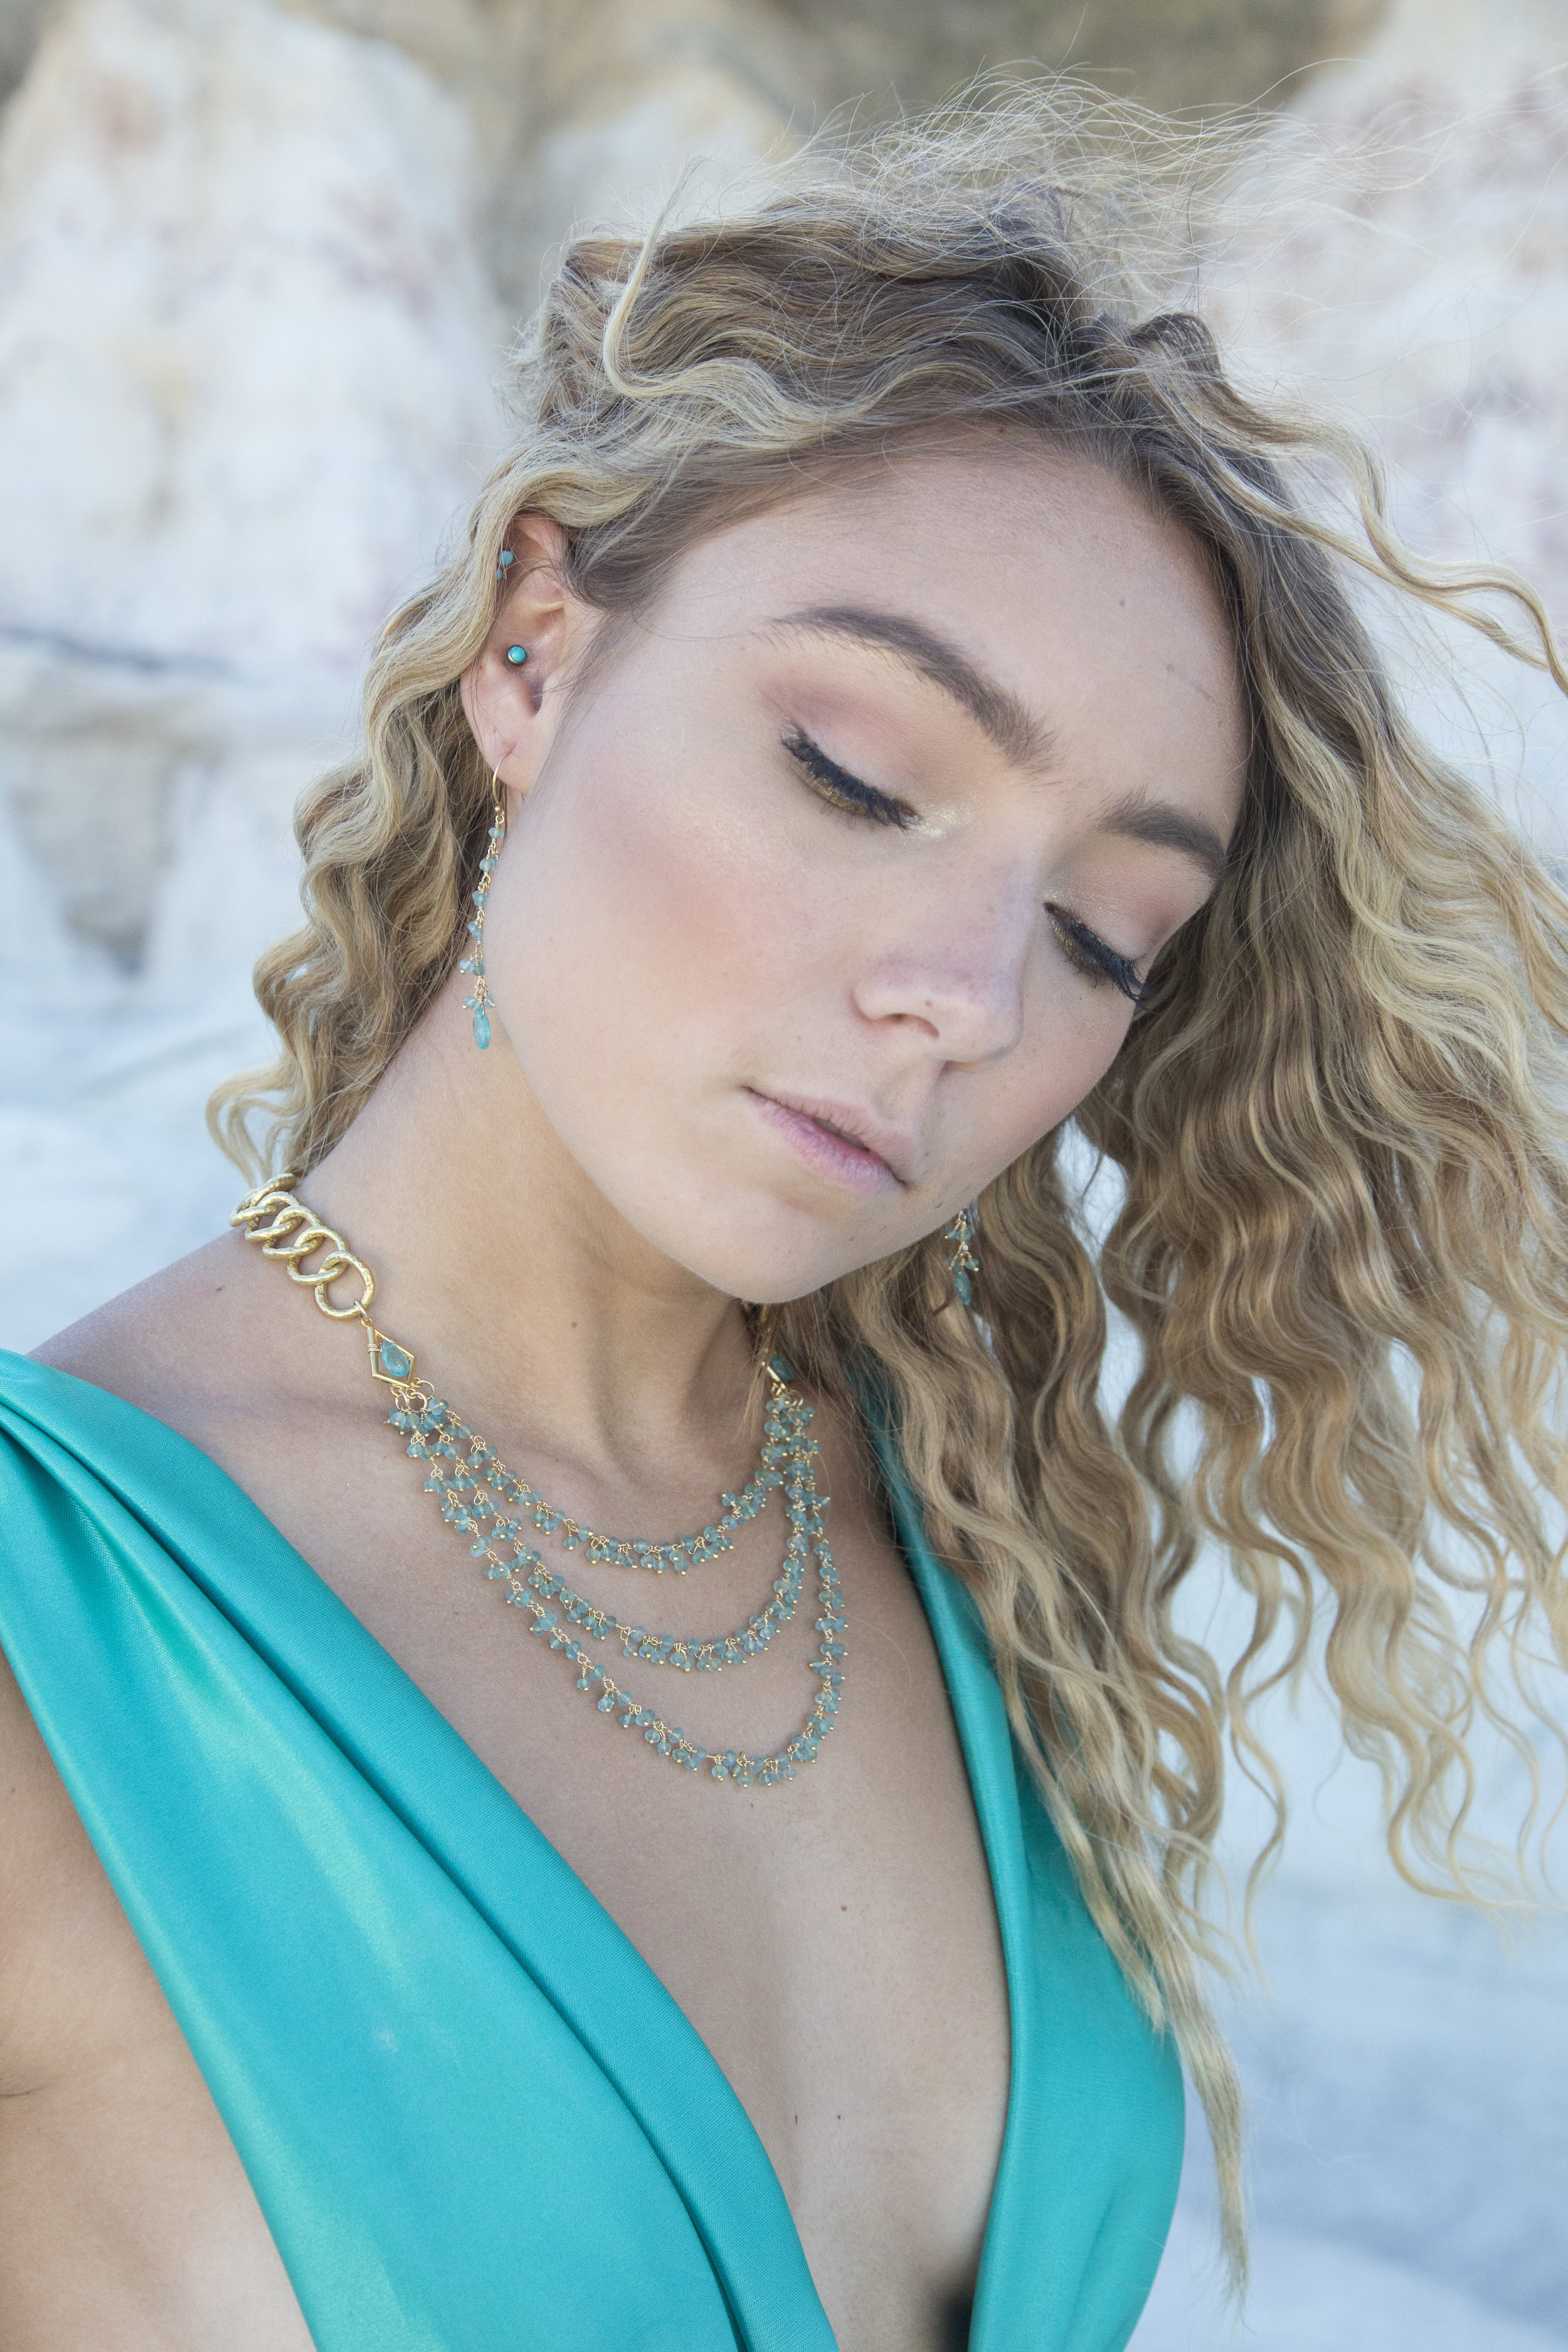 model wearing a multi-strand apatite gemstone necklace